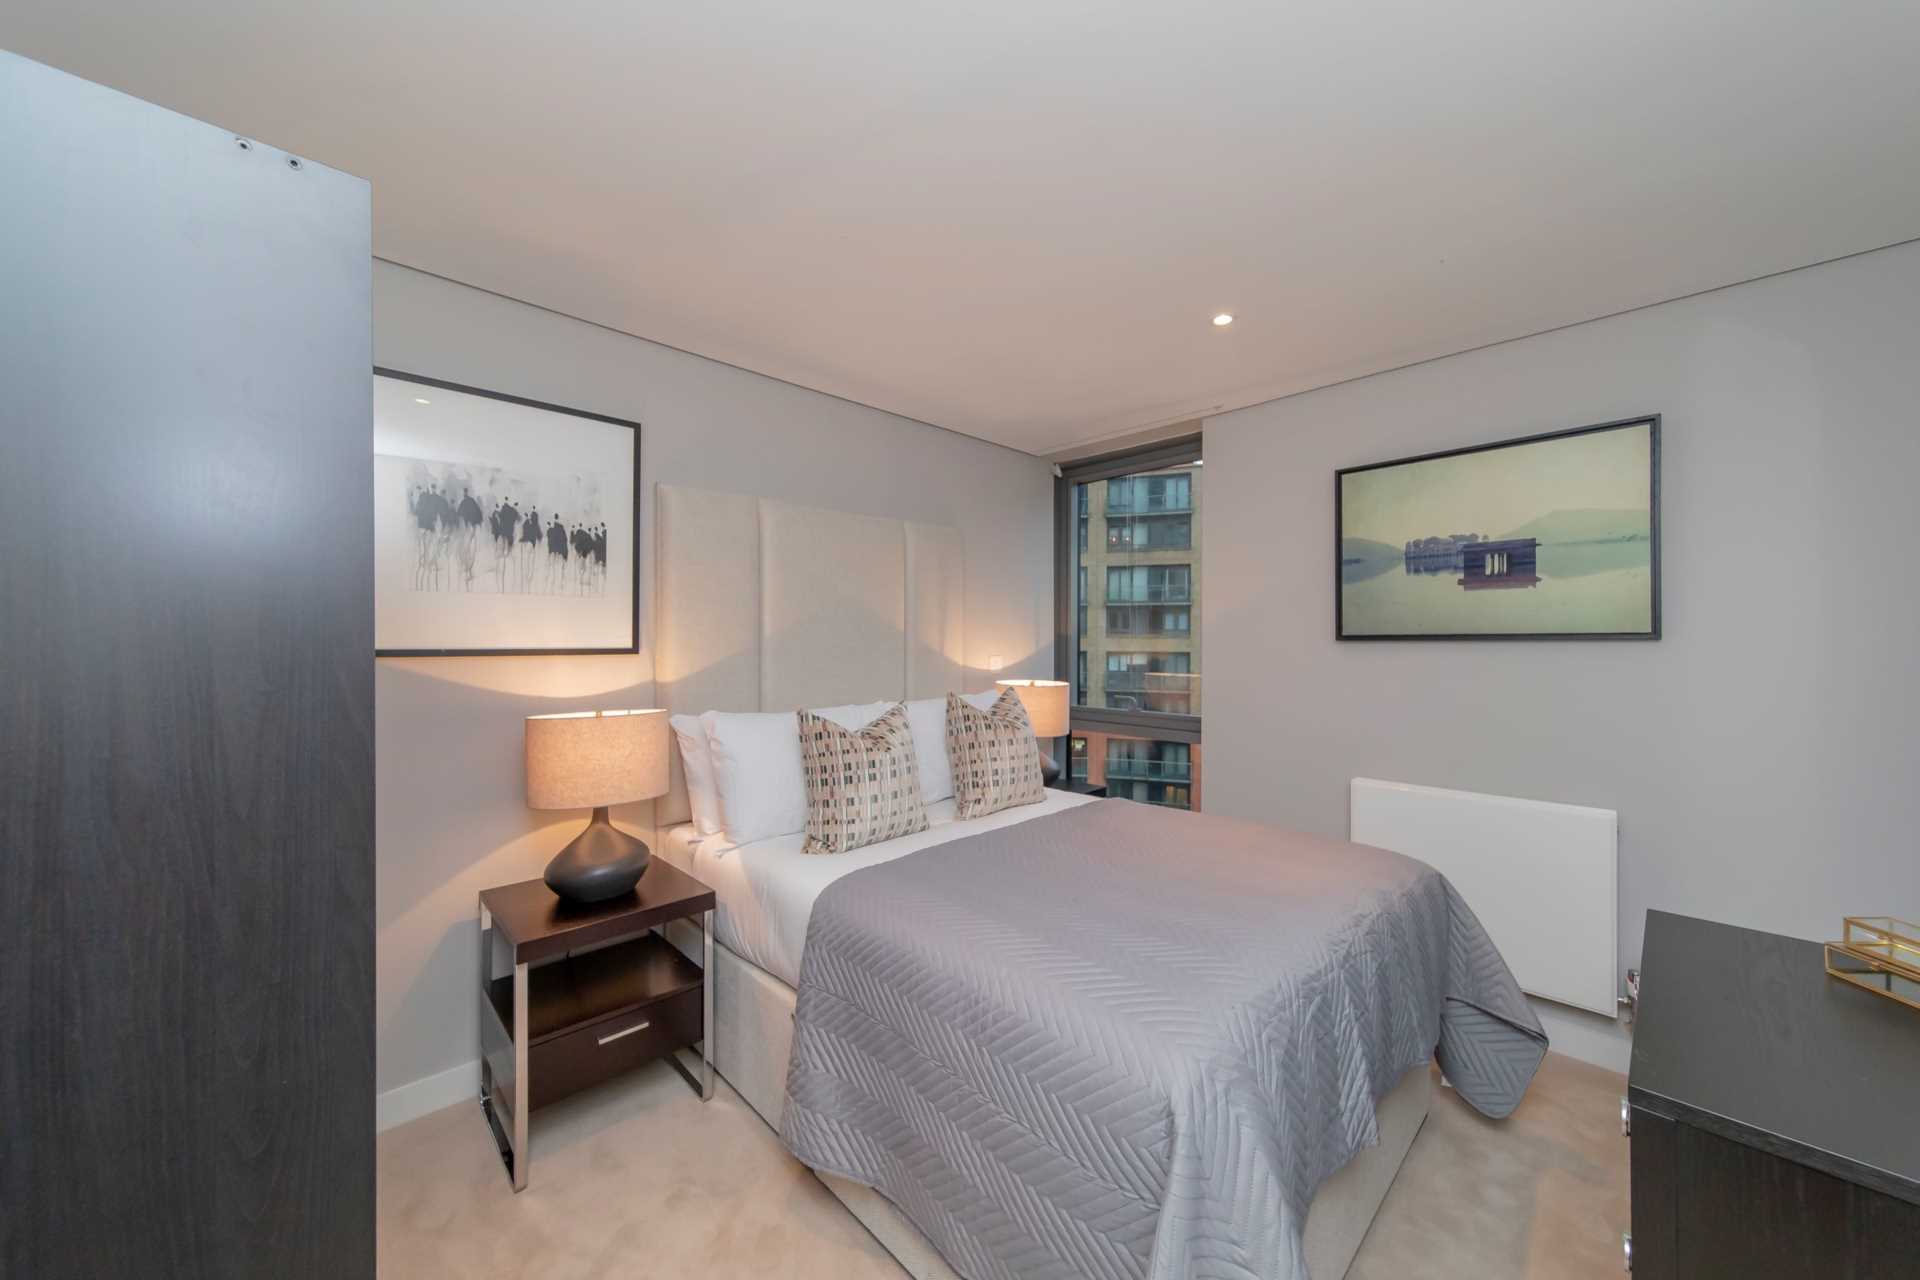 London W2 1AN 3 bed flat rental property internal/external image-6